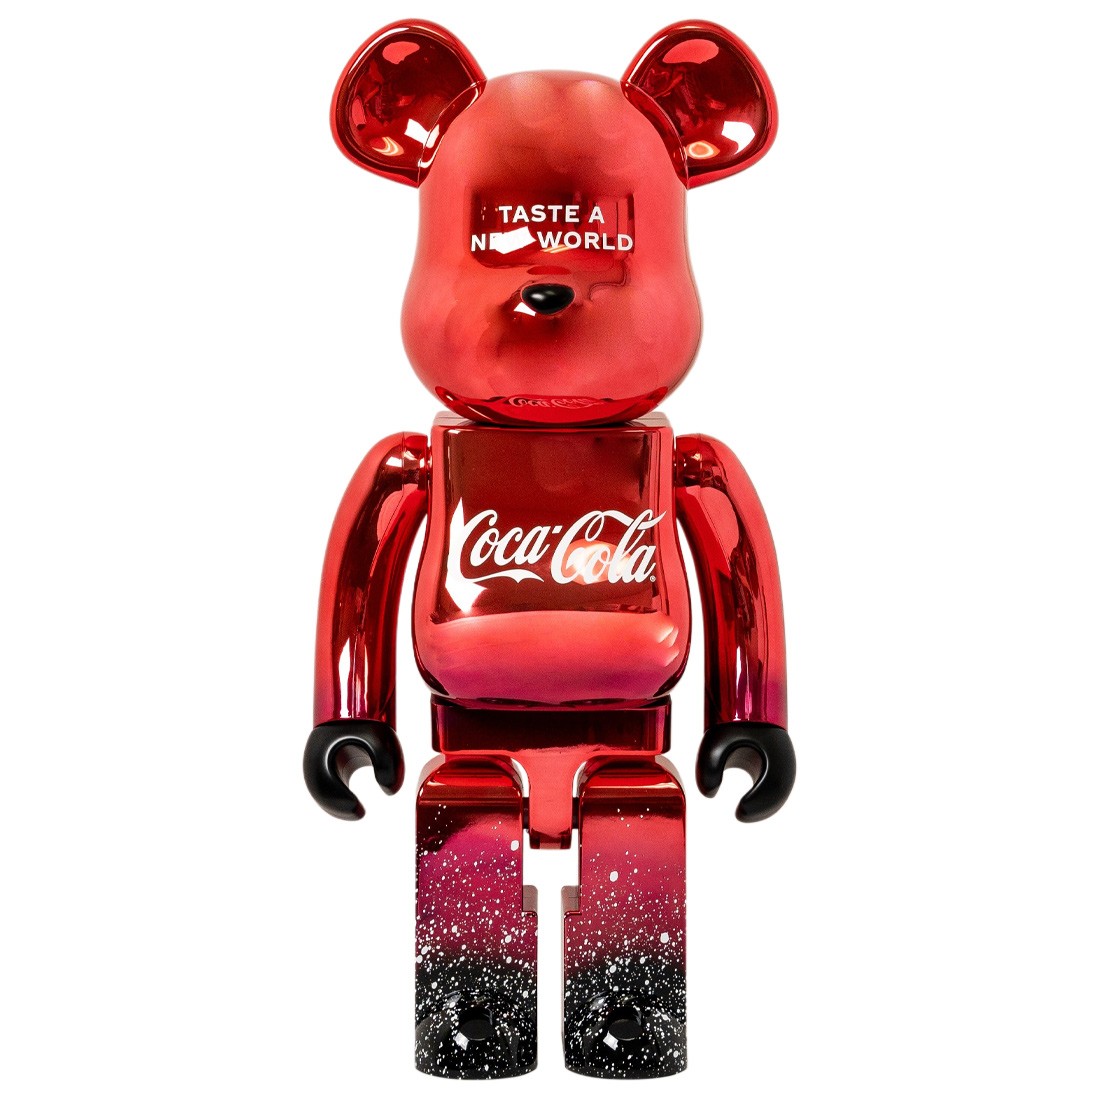 Medicom Coca-Cola Creations 1000% Bearbrick Figure red